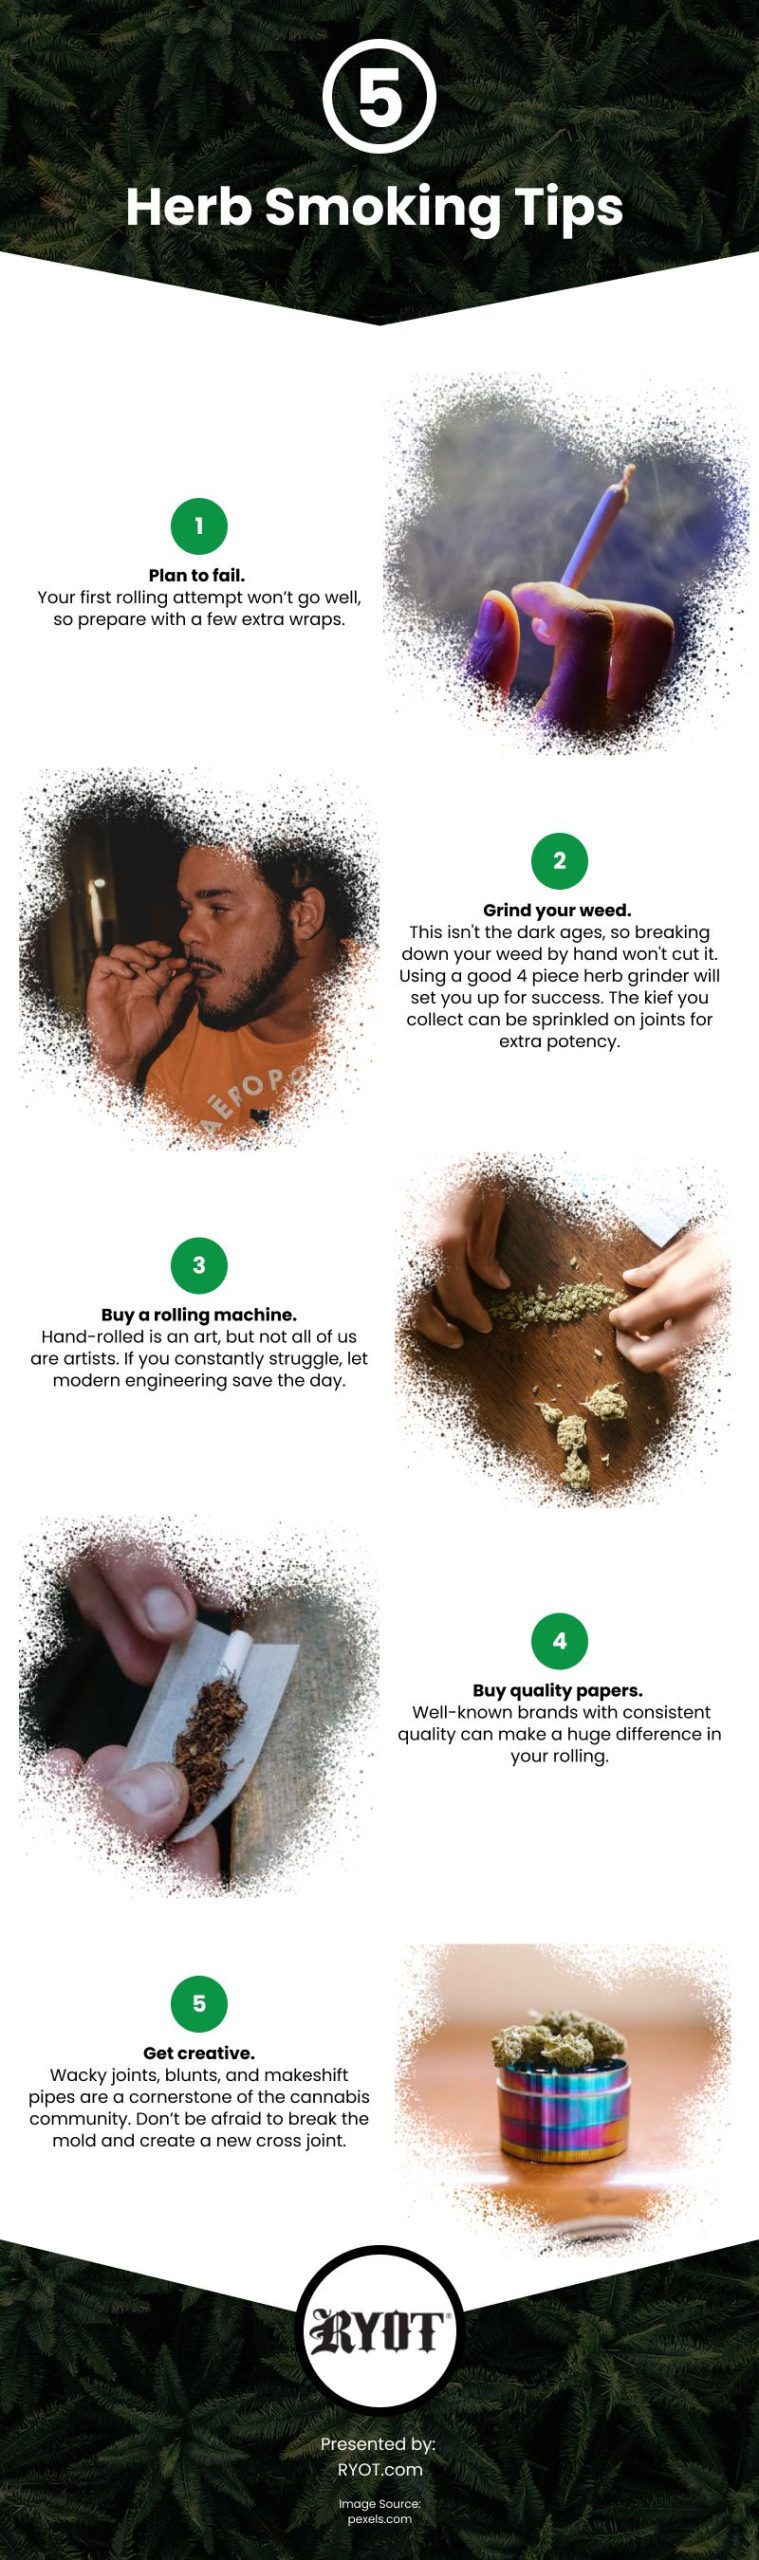 5 Herb Smoking Tips Infographic